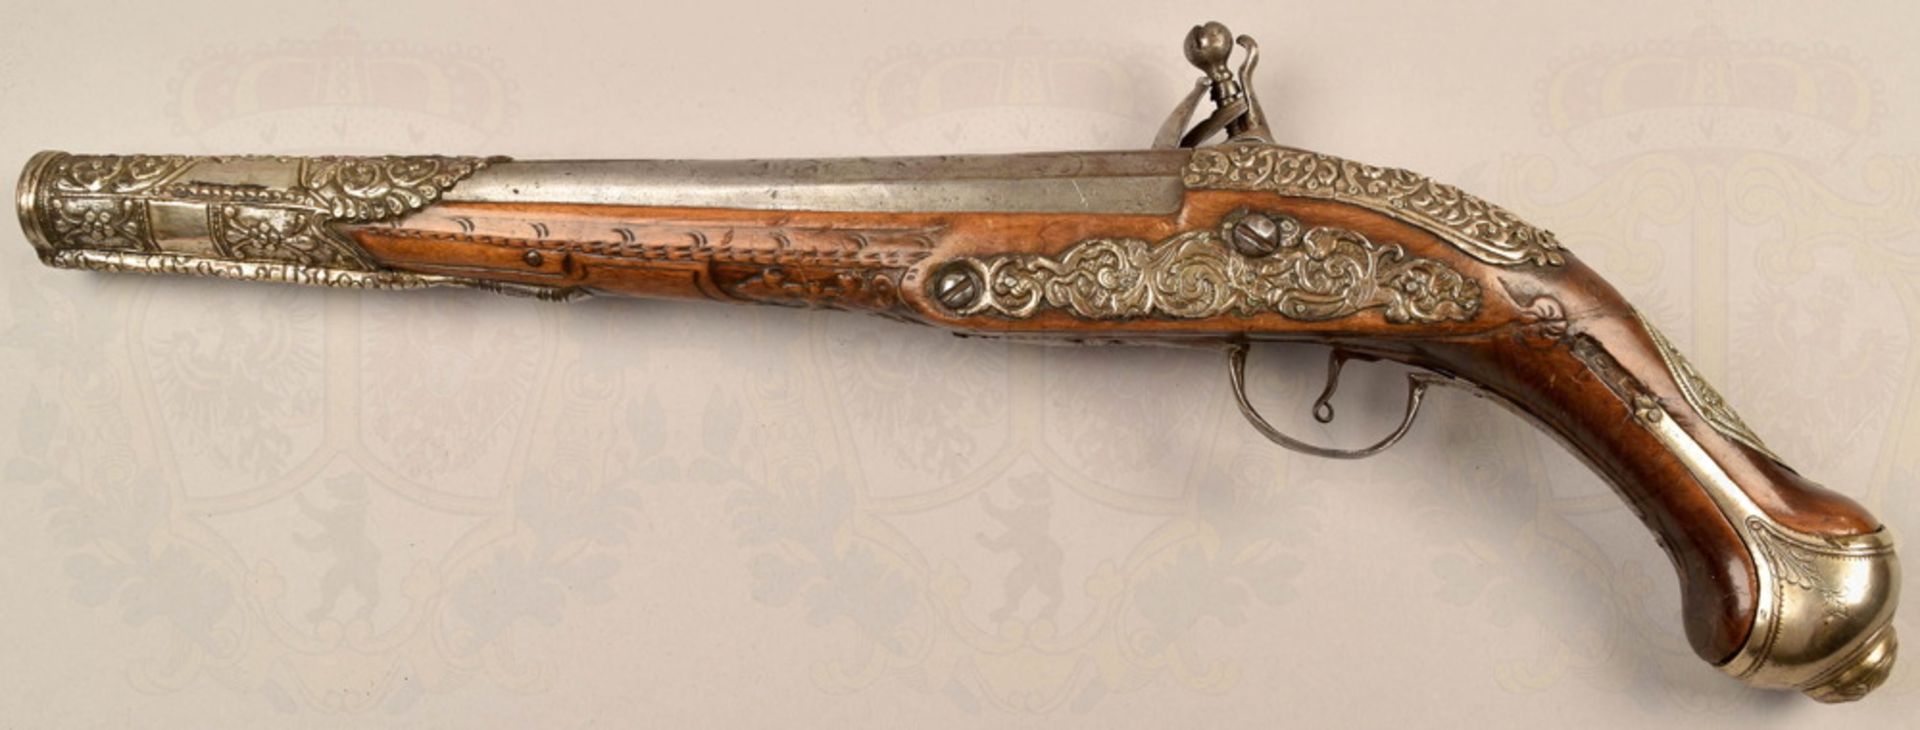 Luxury flintlock pistol made about 1780-1800 - Image 4 of 5